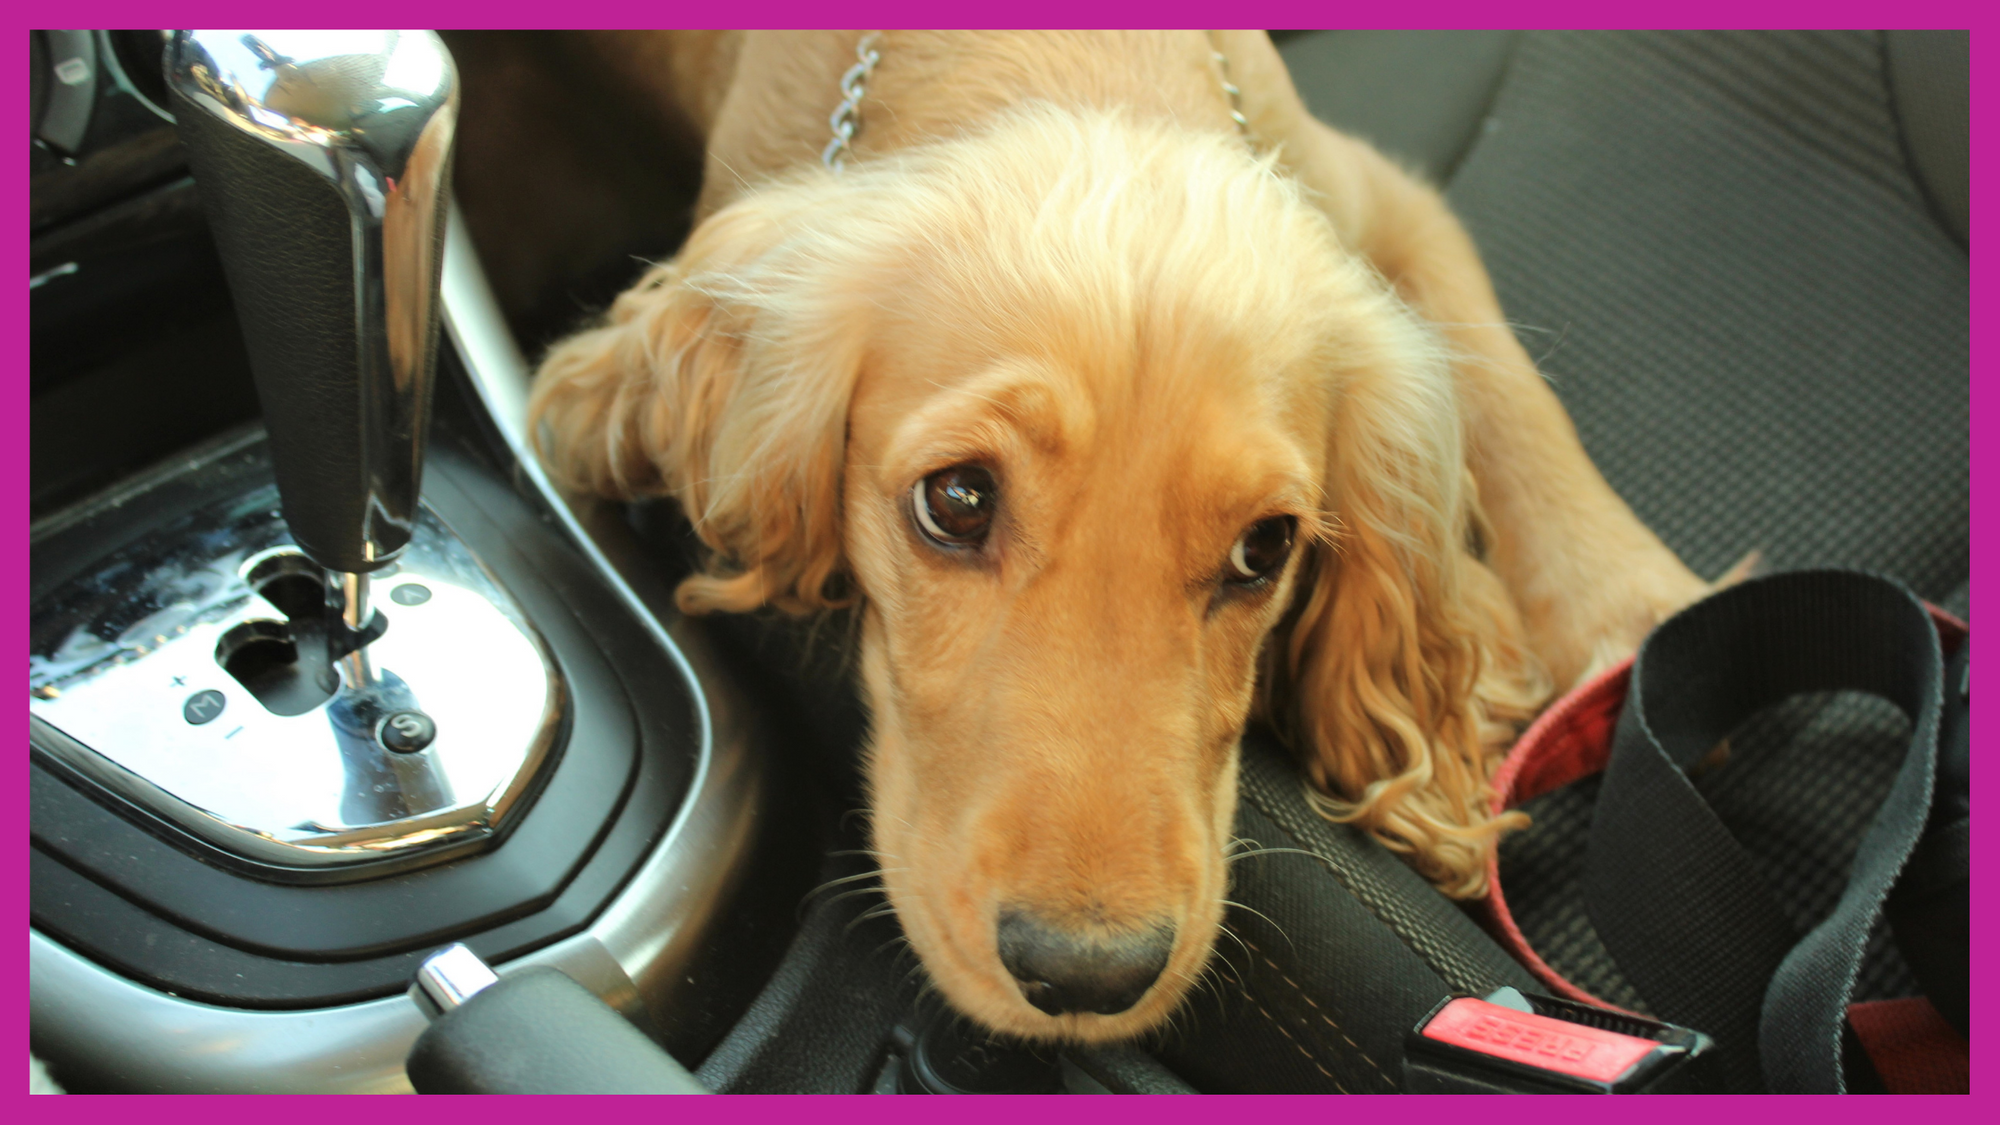 Car safety seat belt standards for pets in Australia